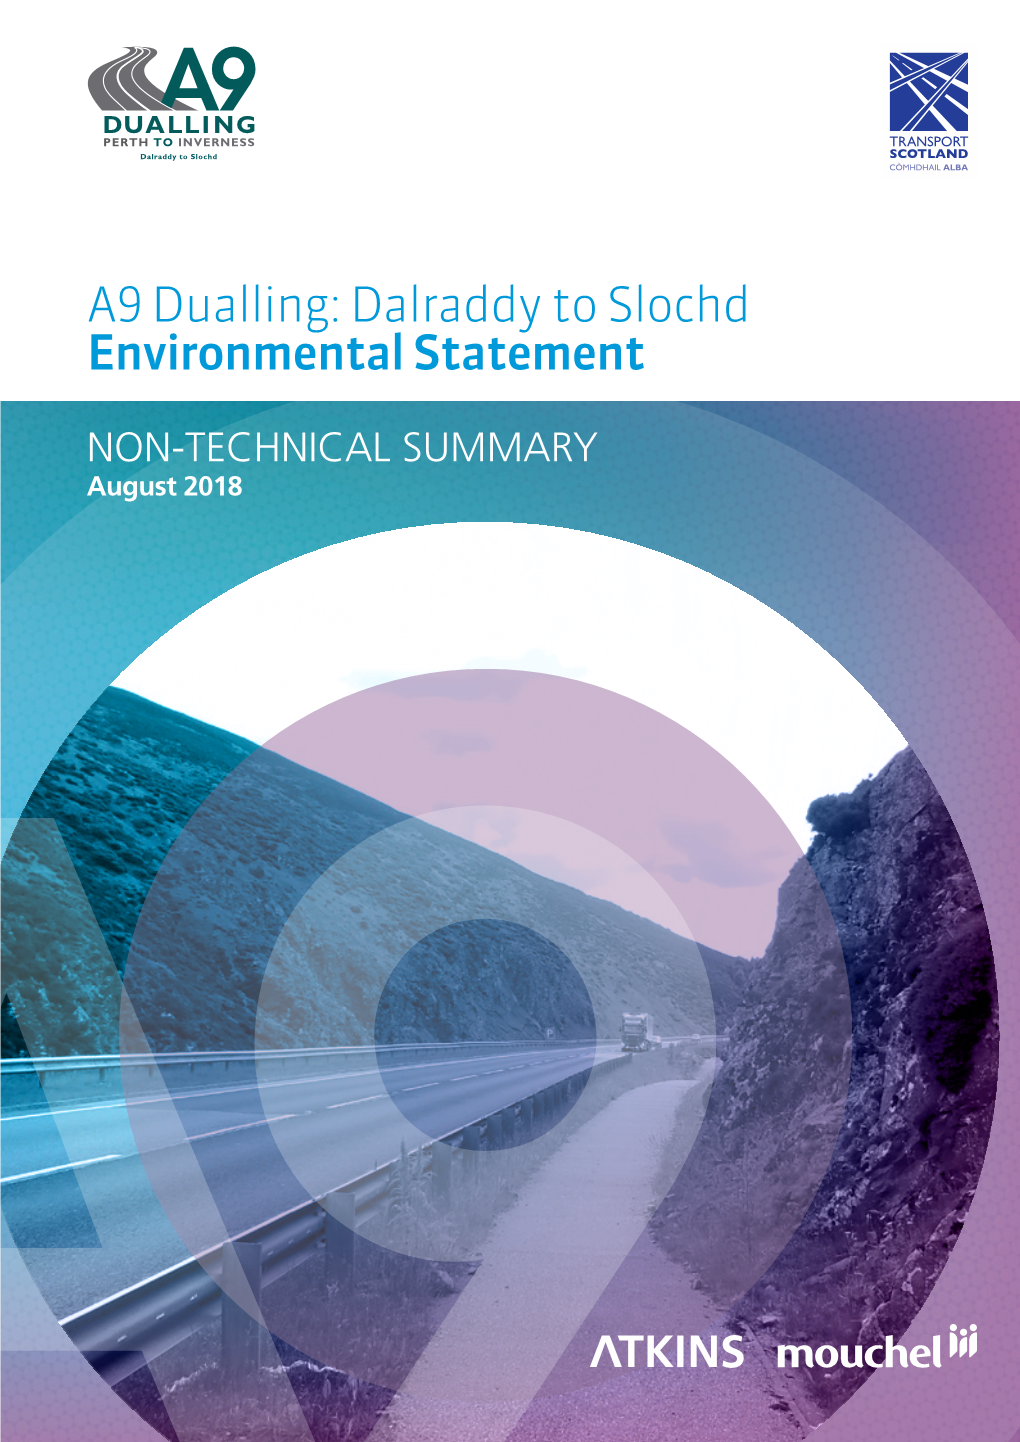 A9 Dualling: Dalraddy to Slochd Environmental Statement